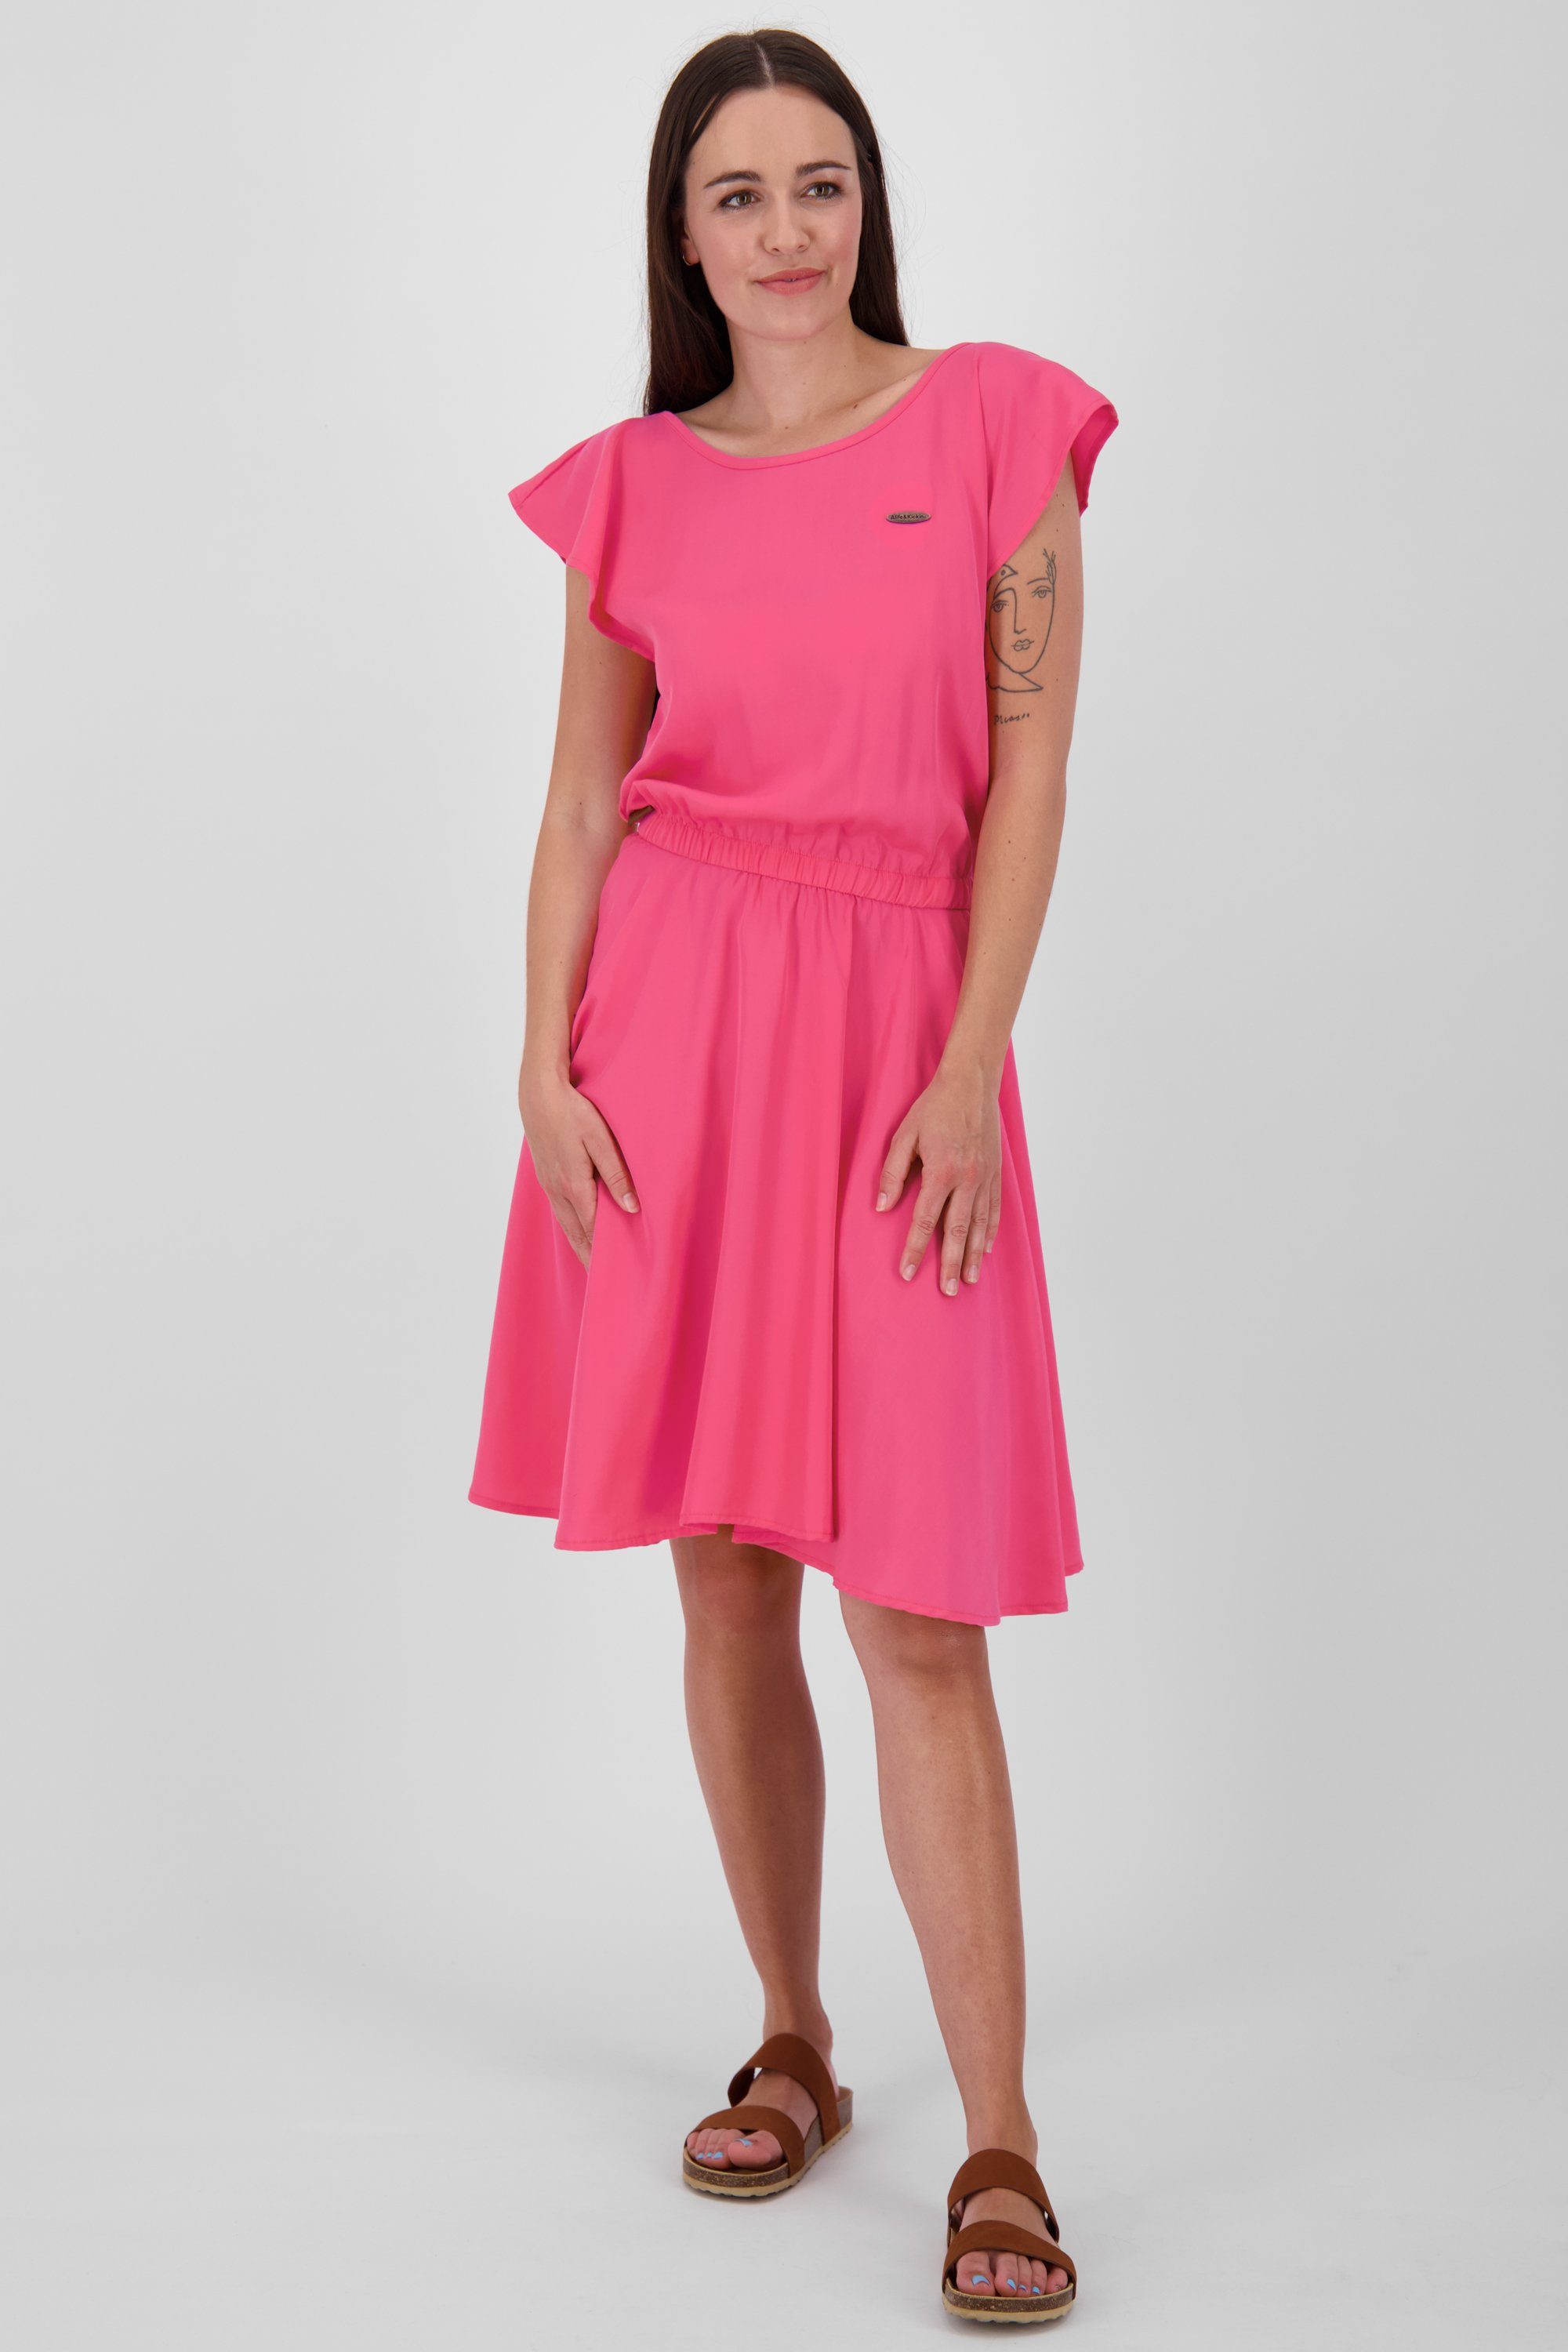 Alife & Dress Kleid Jerseykleid flamingo Damen Sommerkleid, Kickin IsabellaAK